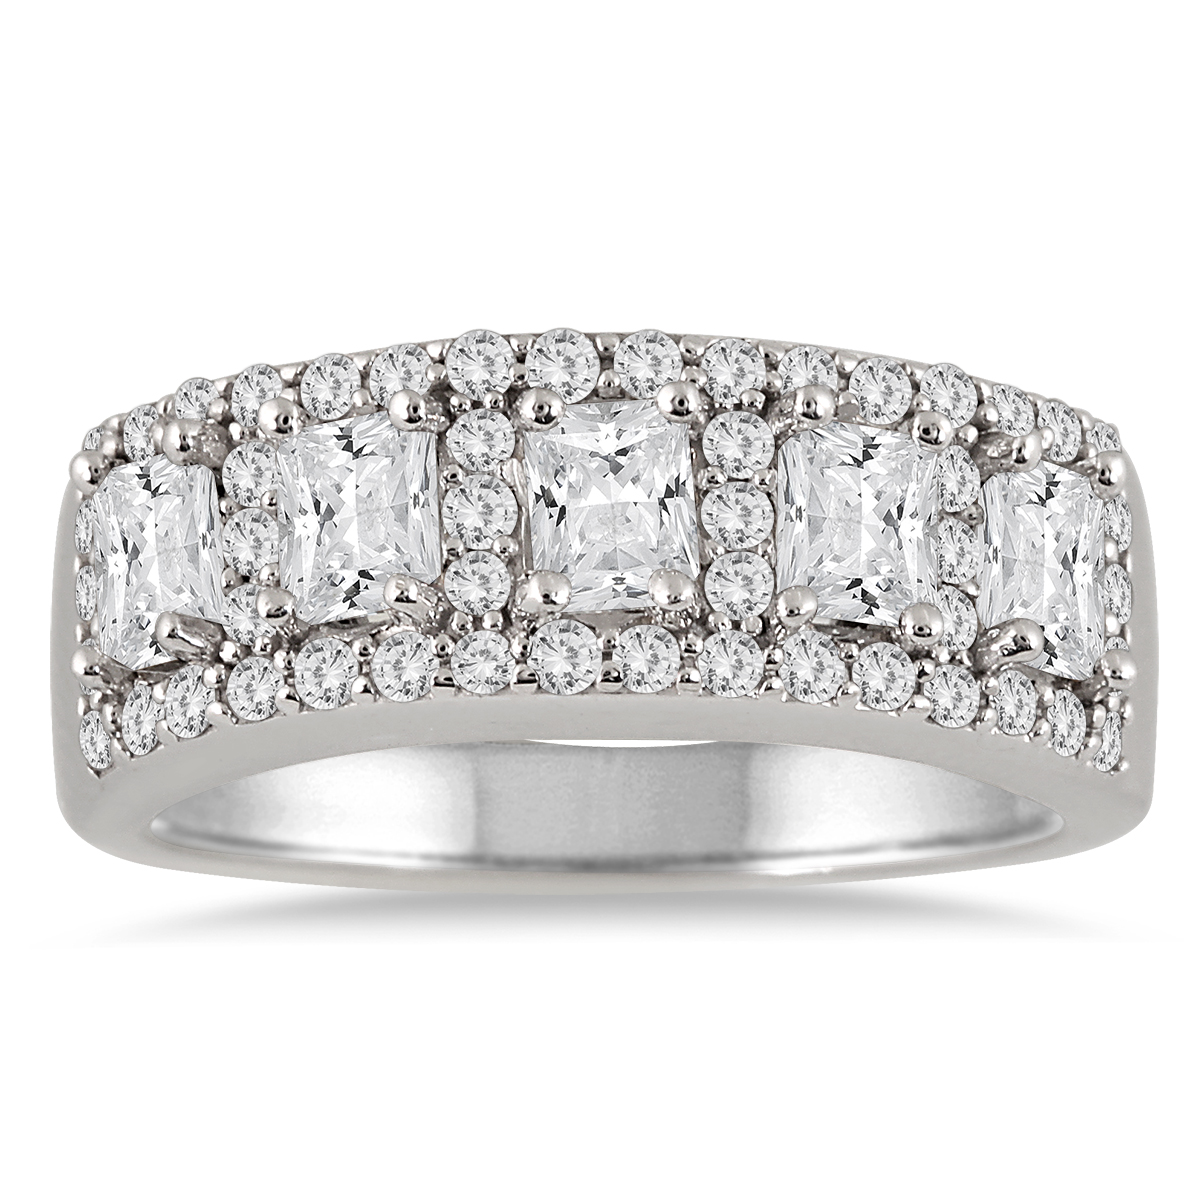 1 3/4 Carat Five Stone Radiant Cut Diamond Ring in 14K White Gold